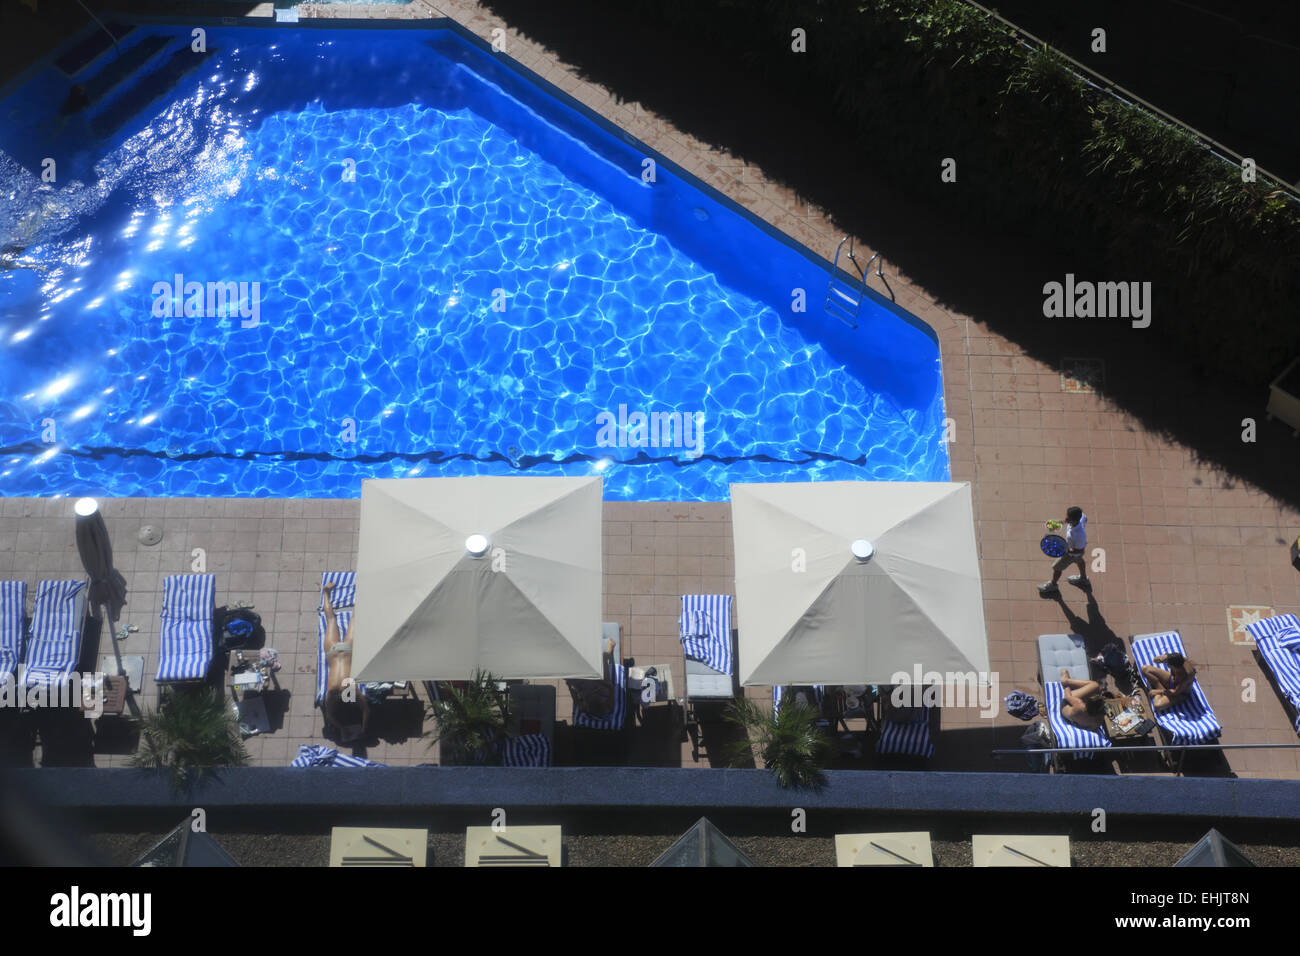 The outdoor swimming pool of Four Seasons Hotel, Sydney, Australia Stock Photo